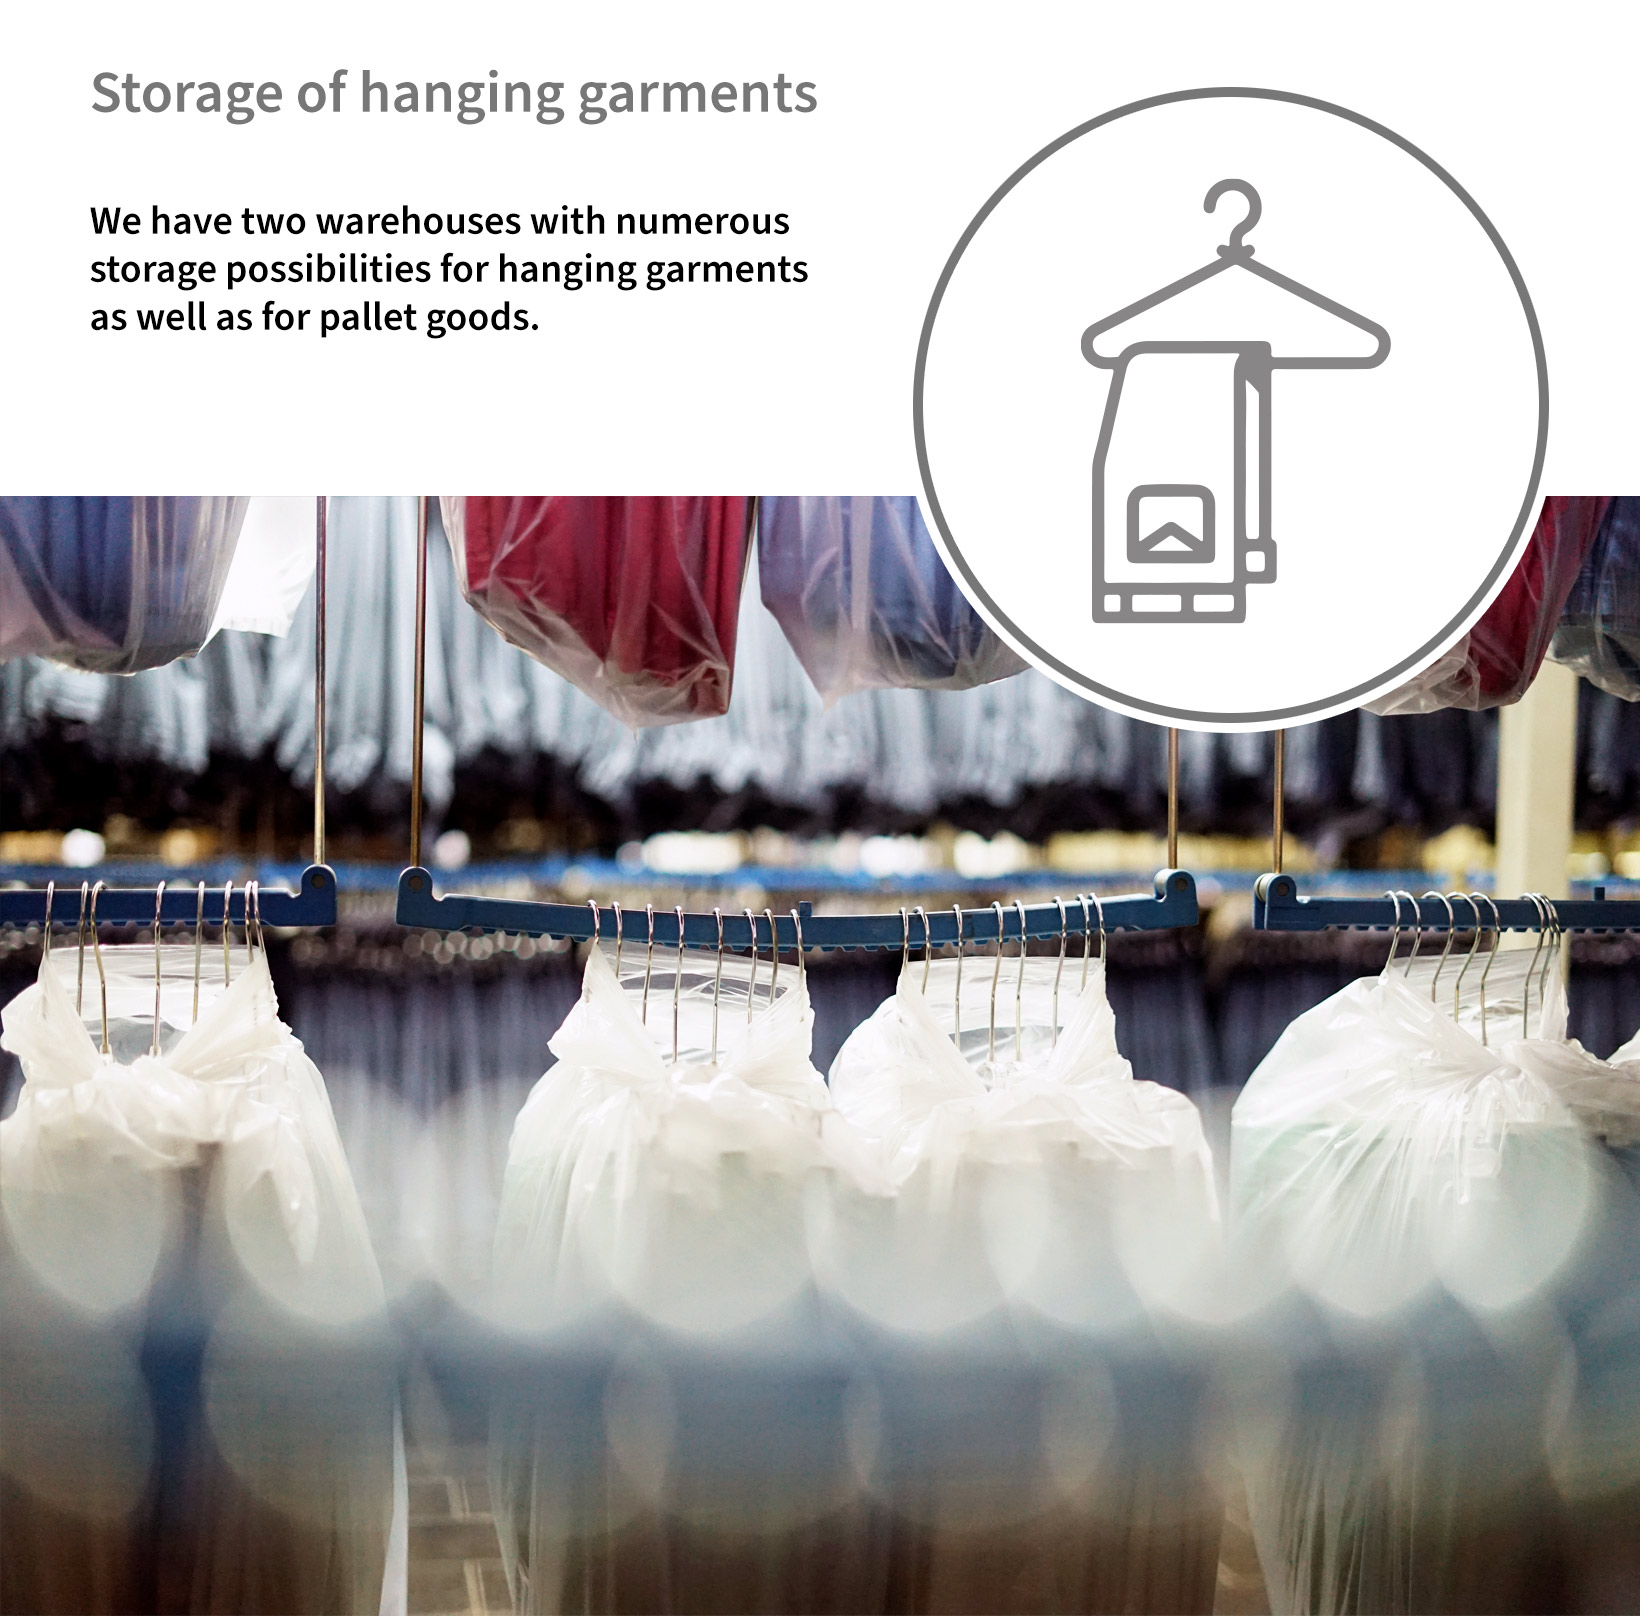 Audis - Storage of hanging garments